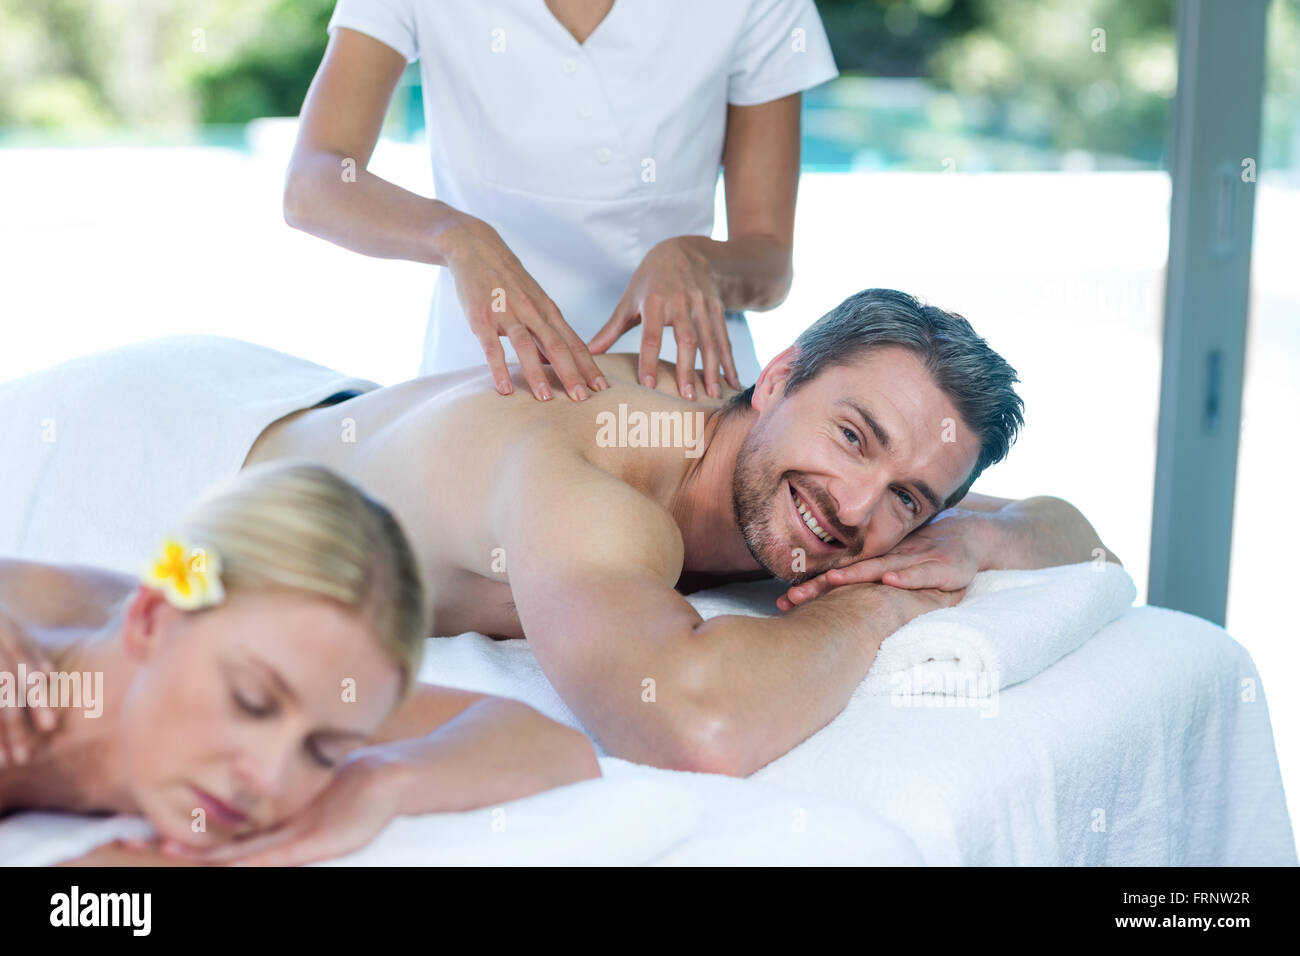 Man receiving back massage from masseur Stock Photo